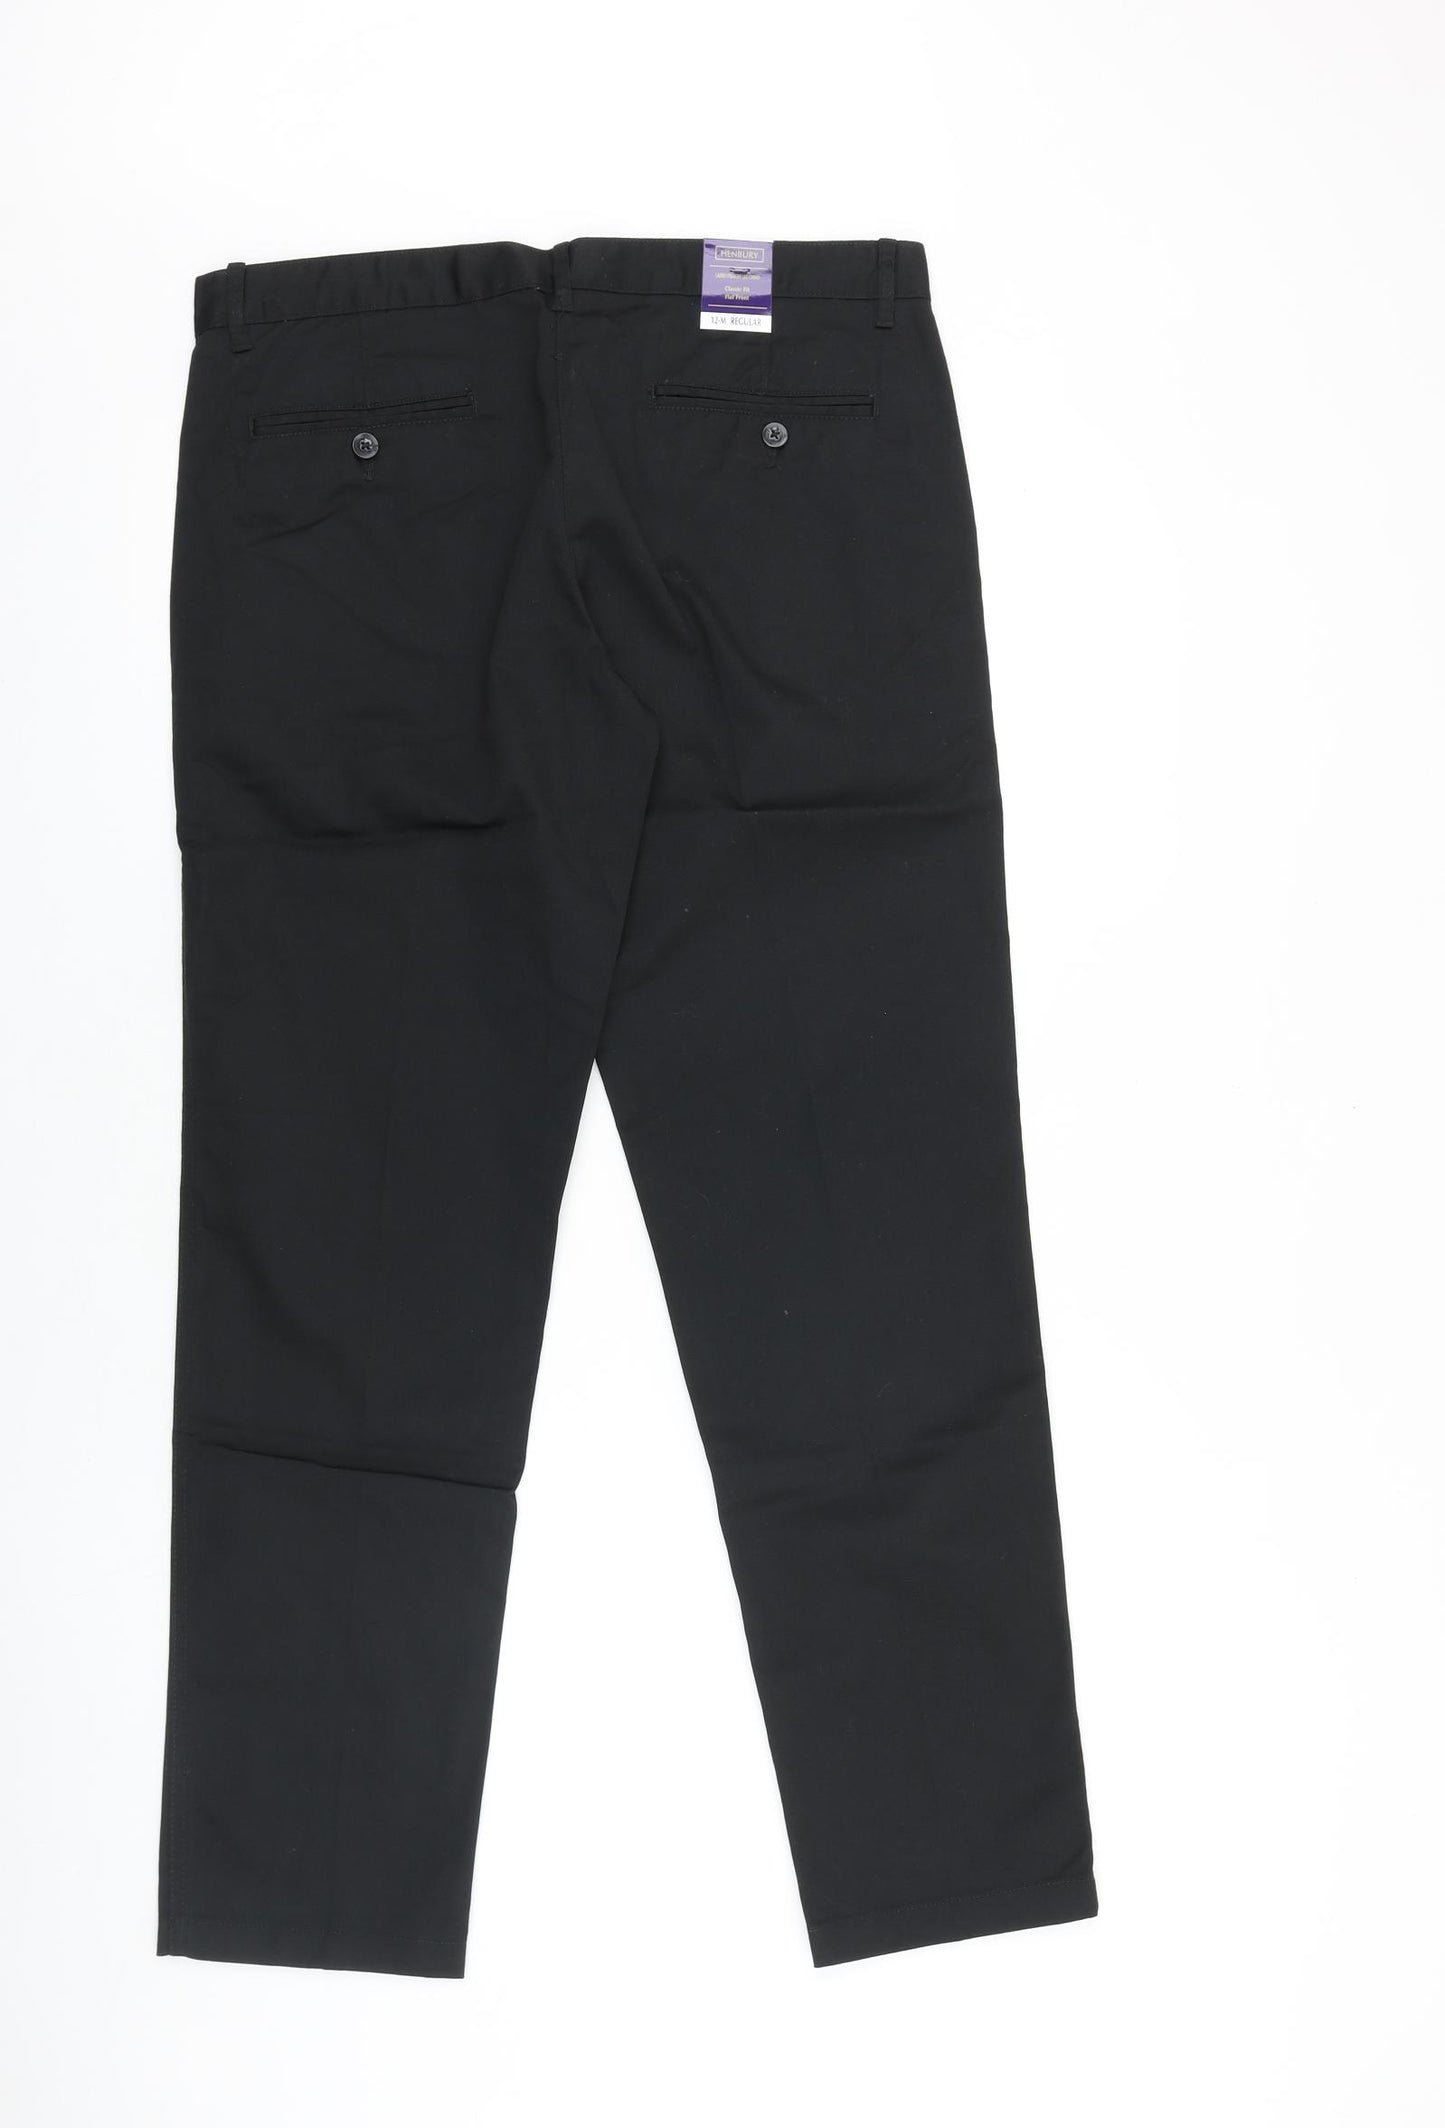 Henbury Womens Black Cotton Dress Pants Trousers Size 12 L30 in Regular Zip